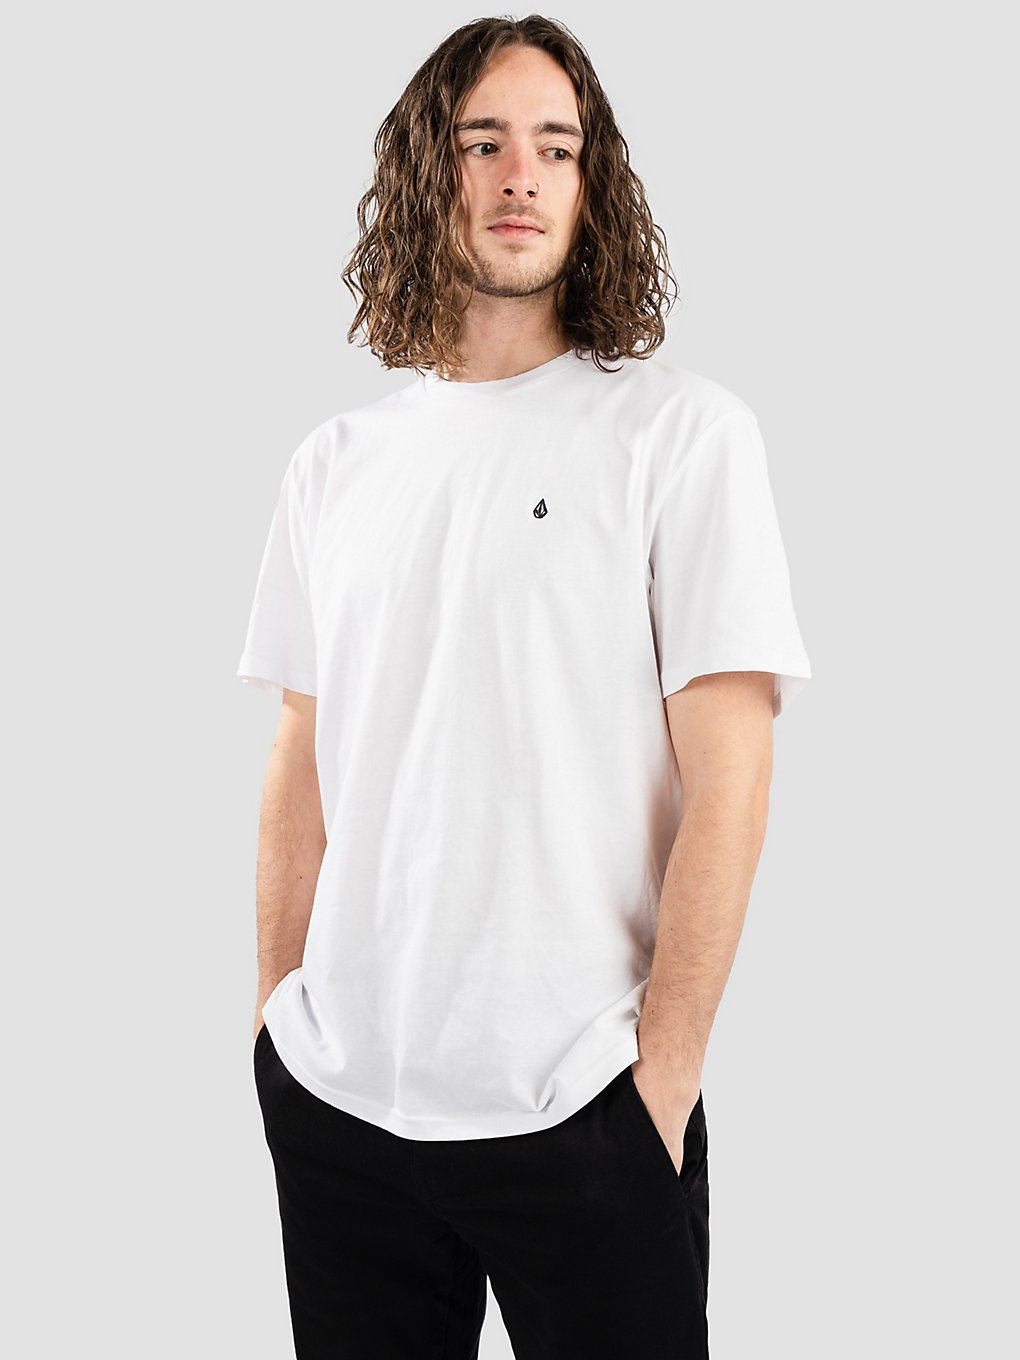 Volcom Stone Blanks Bsc T-Shirt white kaufen